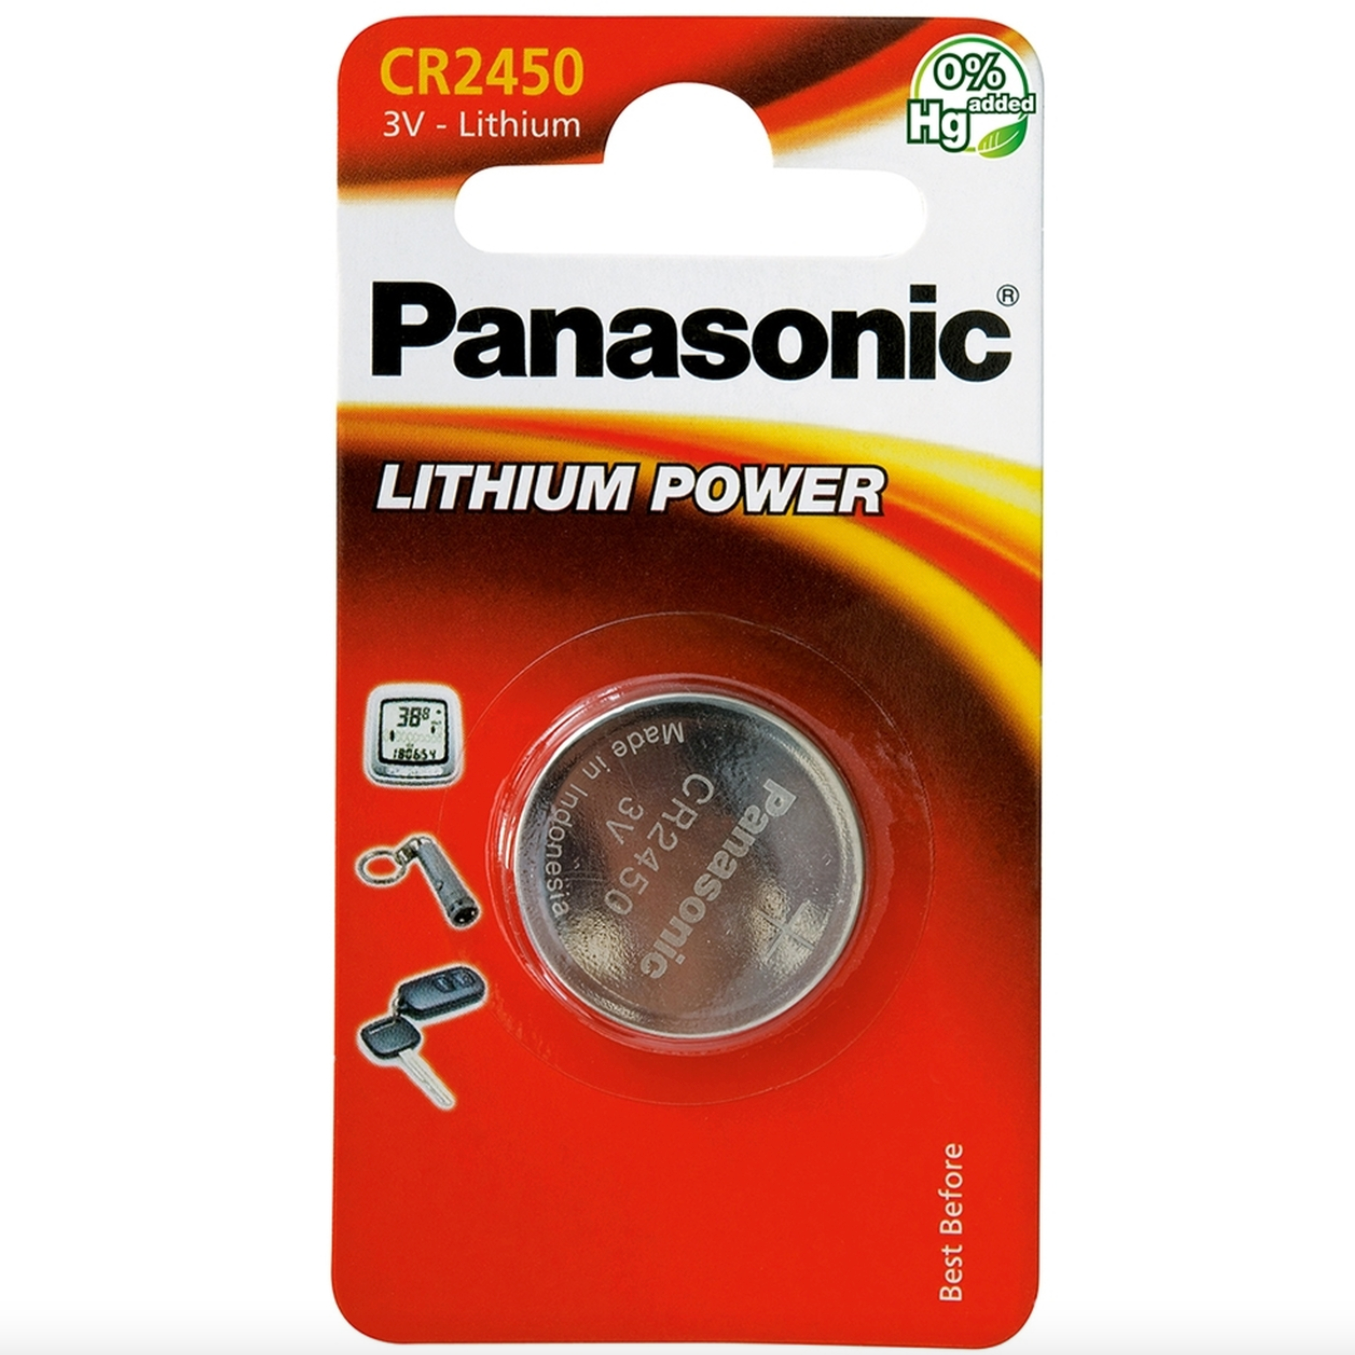 CR2450 Lithium Coin Battery